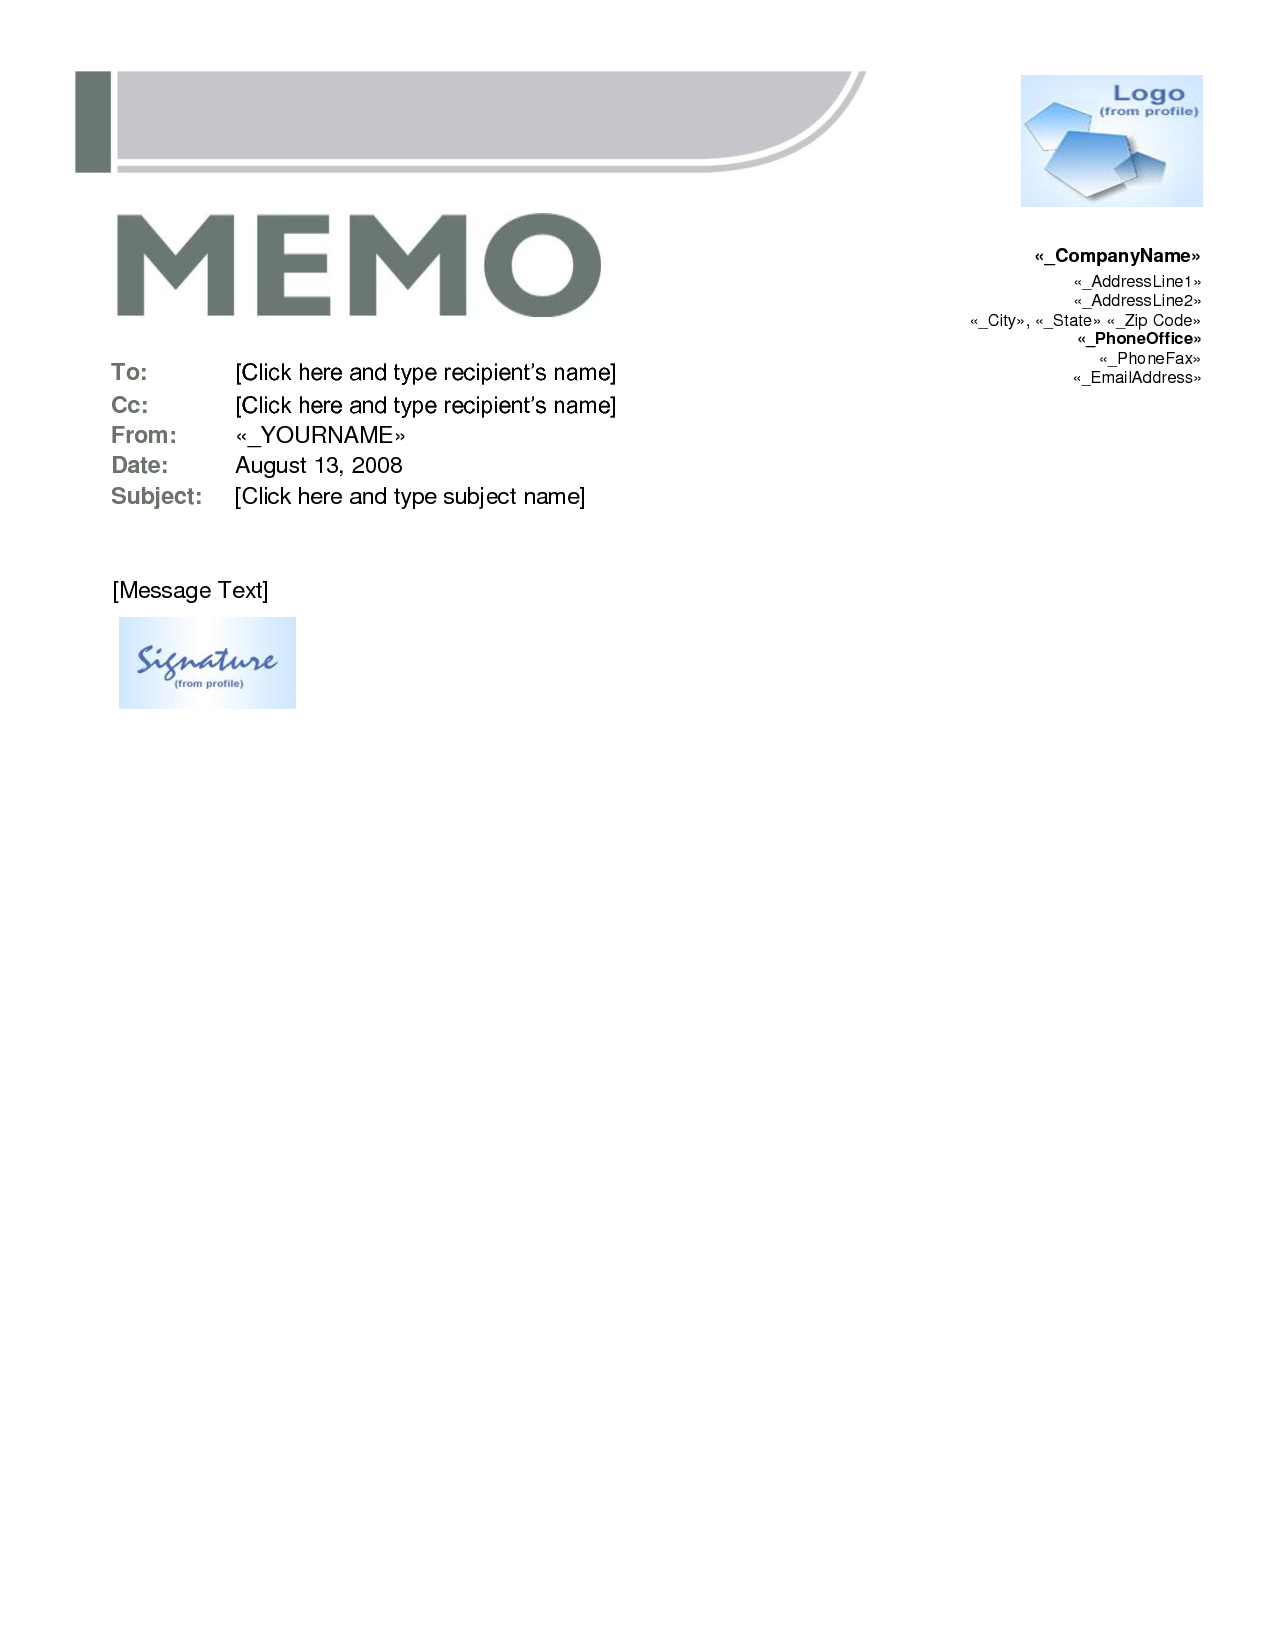 Memo Template Word | E Commercewordpress Throughout Memo Template Word 2010